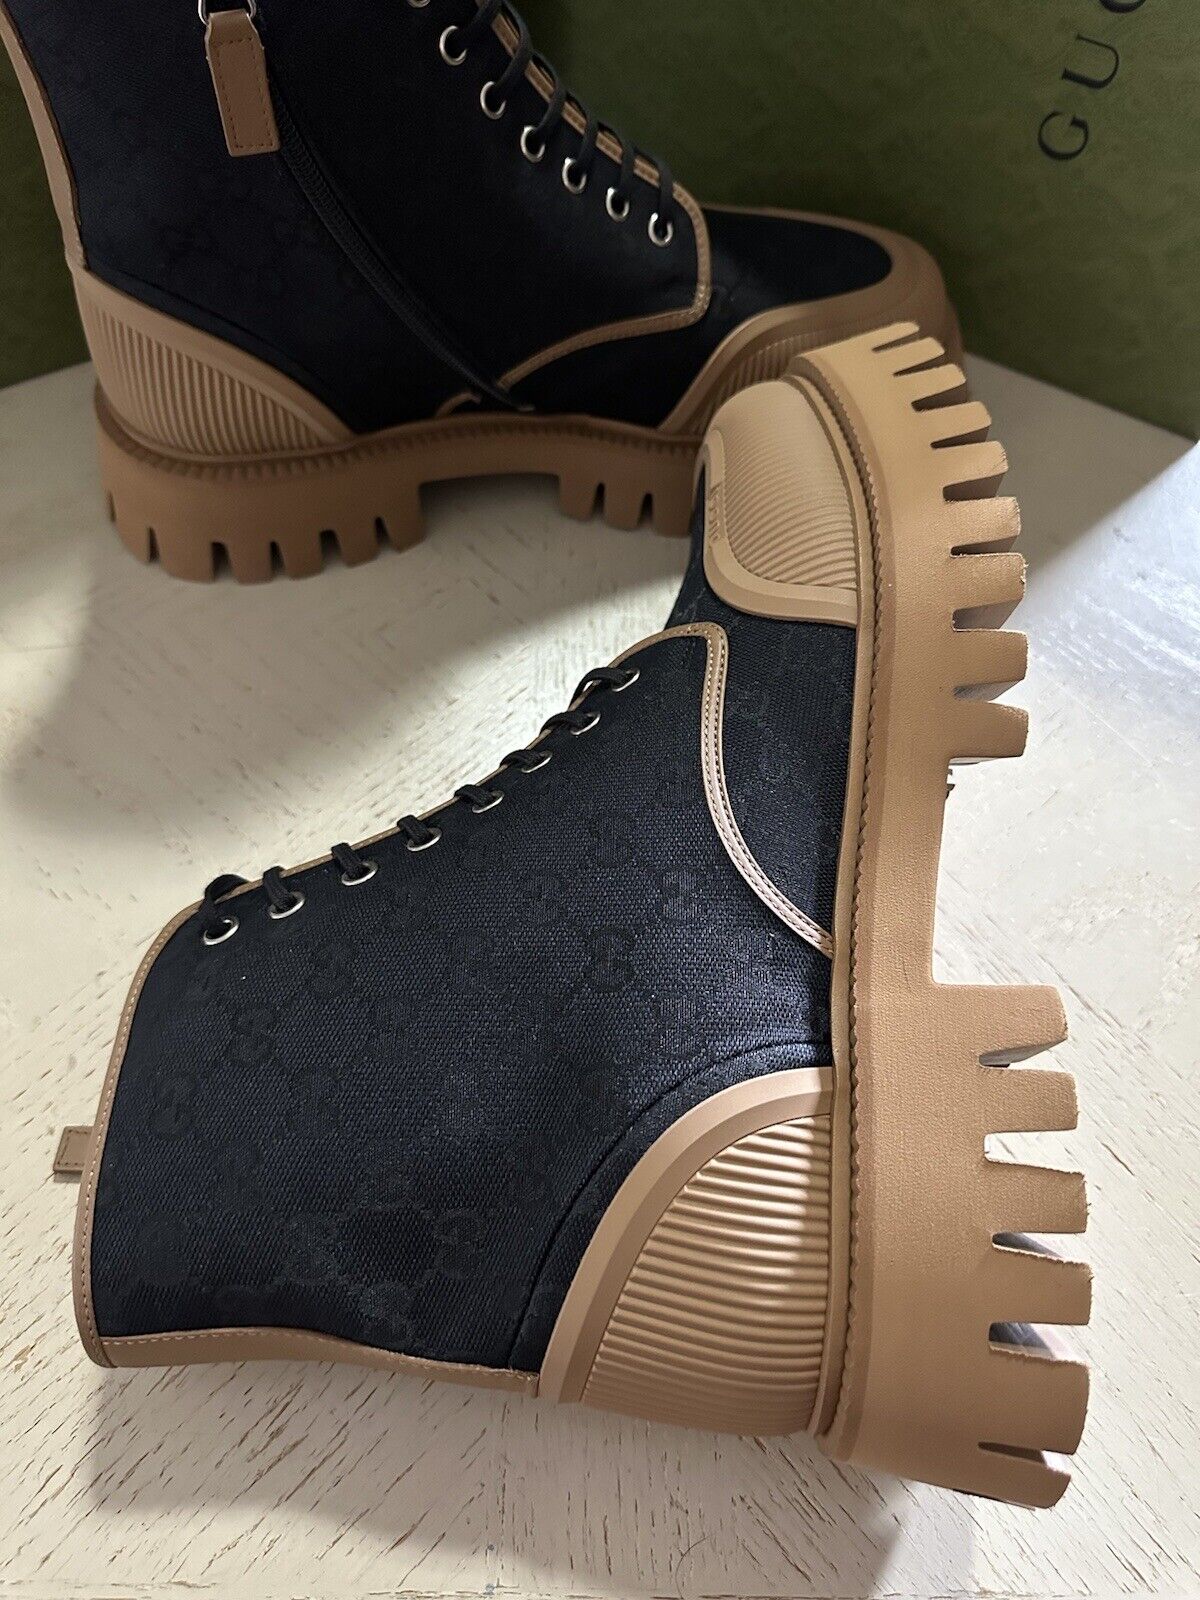 NIB Gucci Men GG Logo Canvas/Leather Boots Shoes Black/Beige 8 US/7 UK 699970